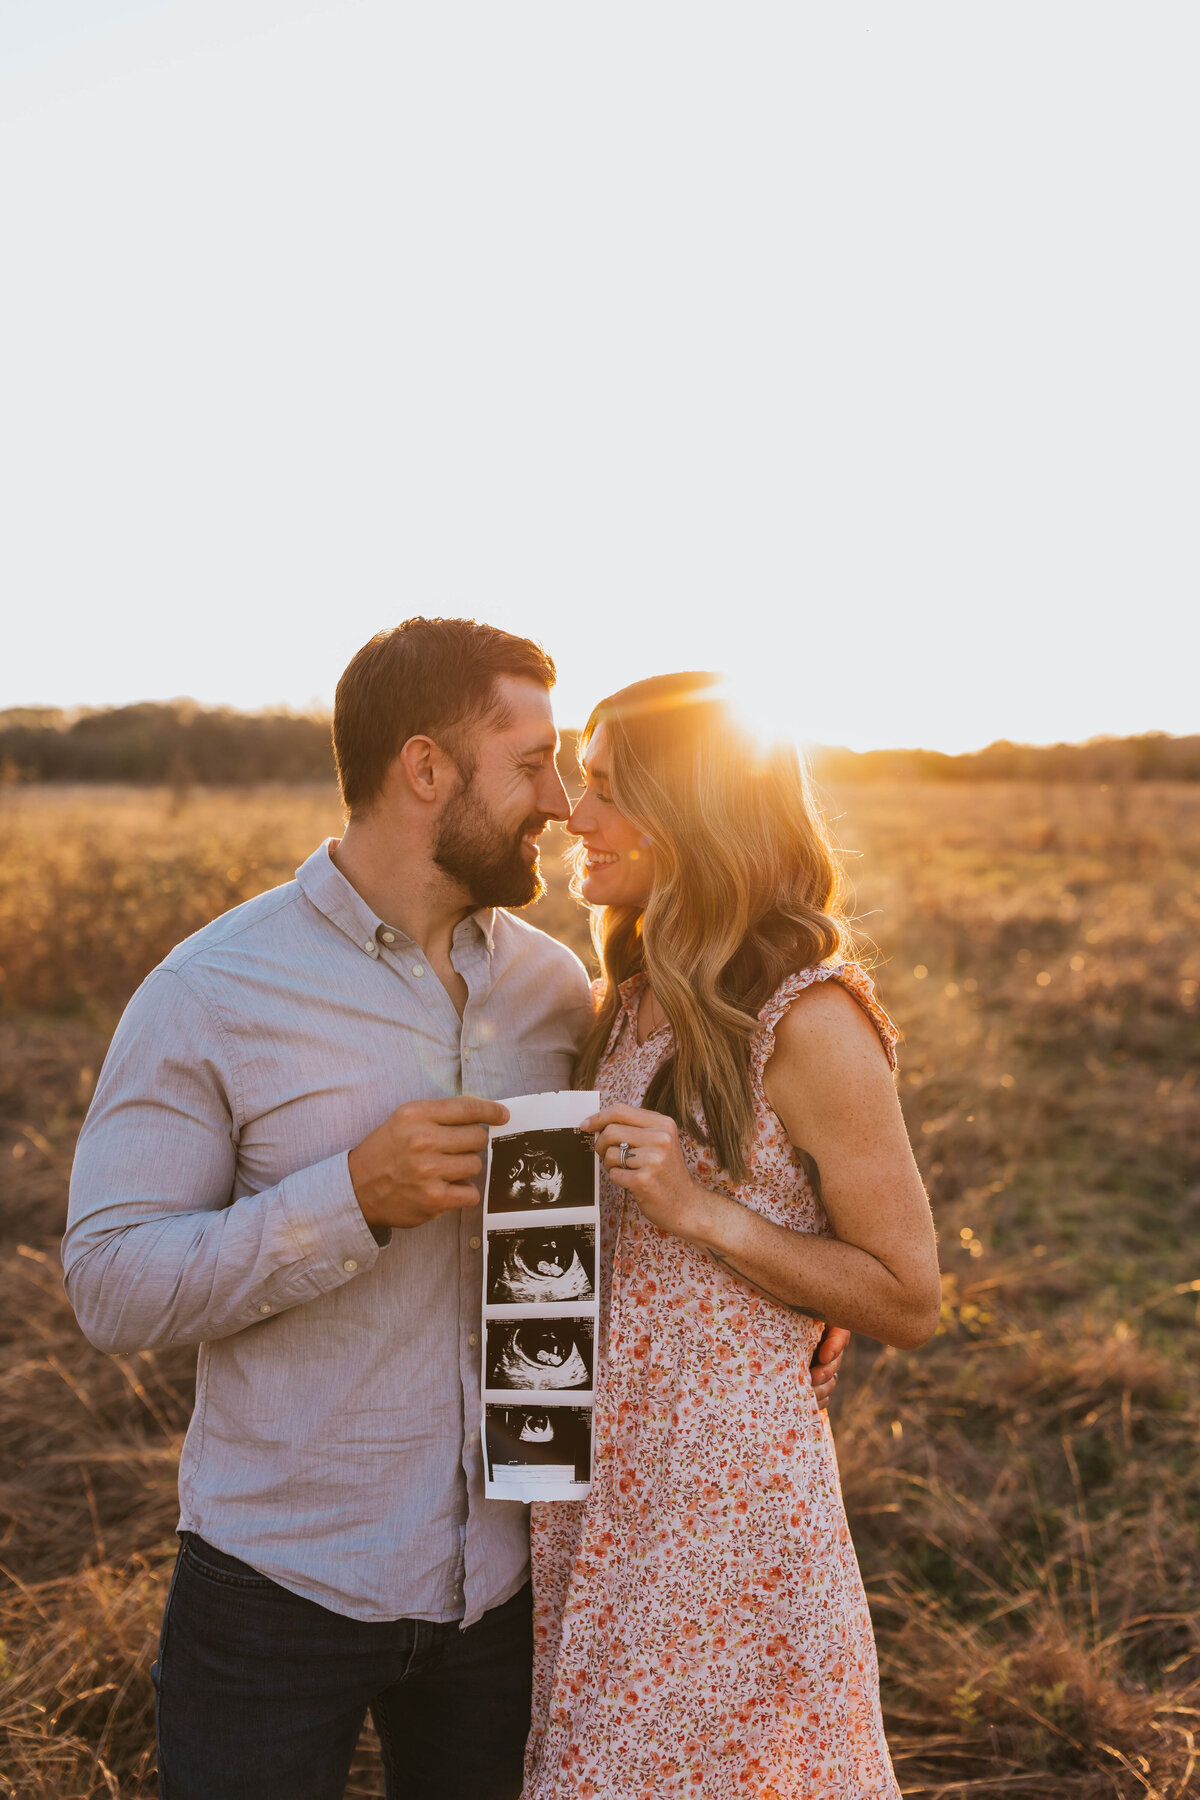 A couple holding a sonogram photo announcing their pregnancy